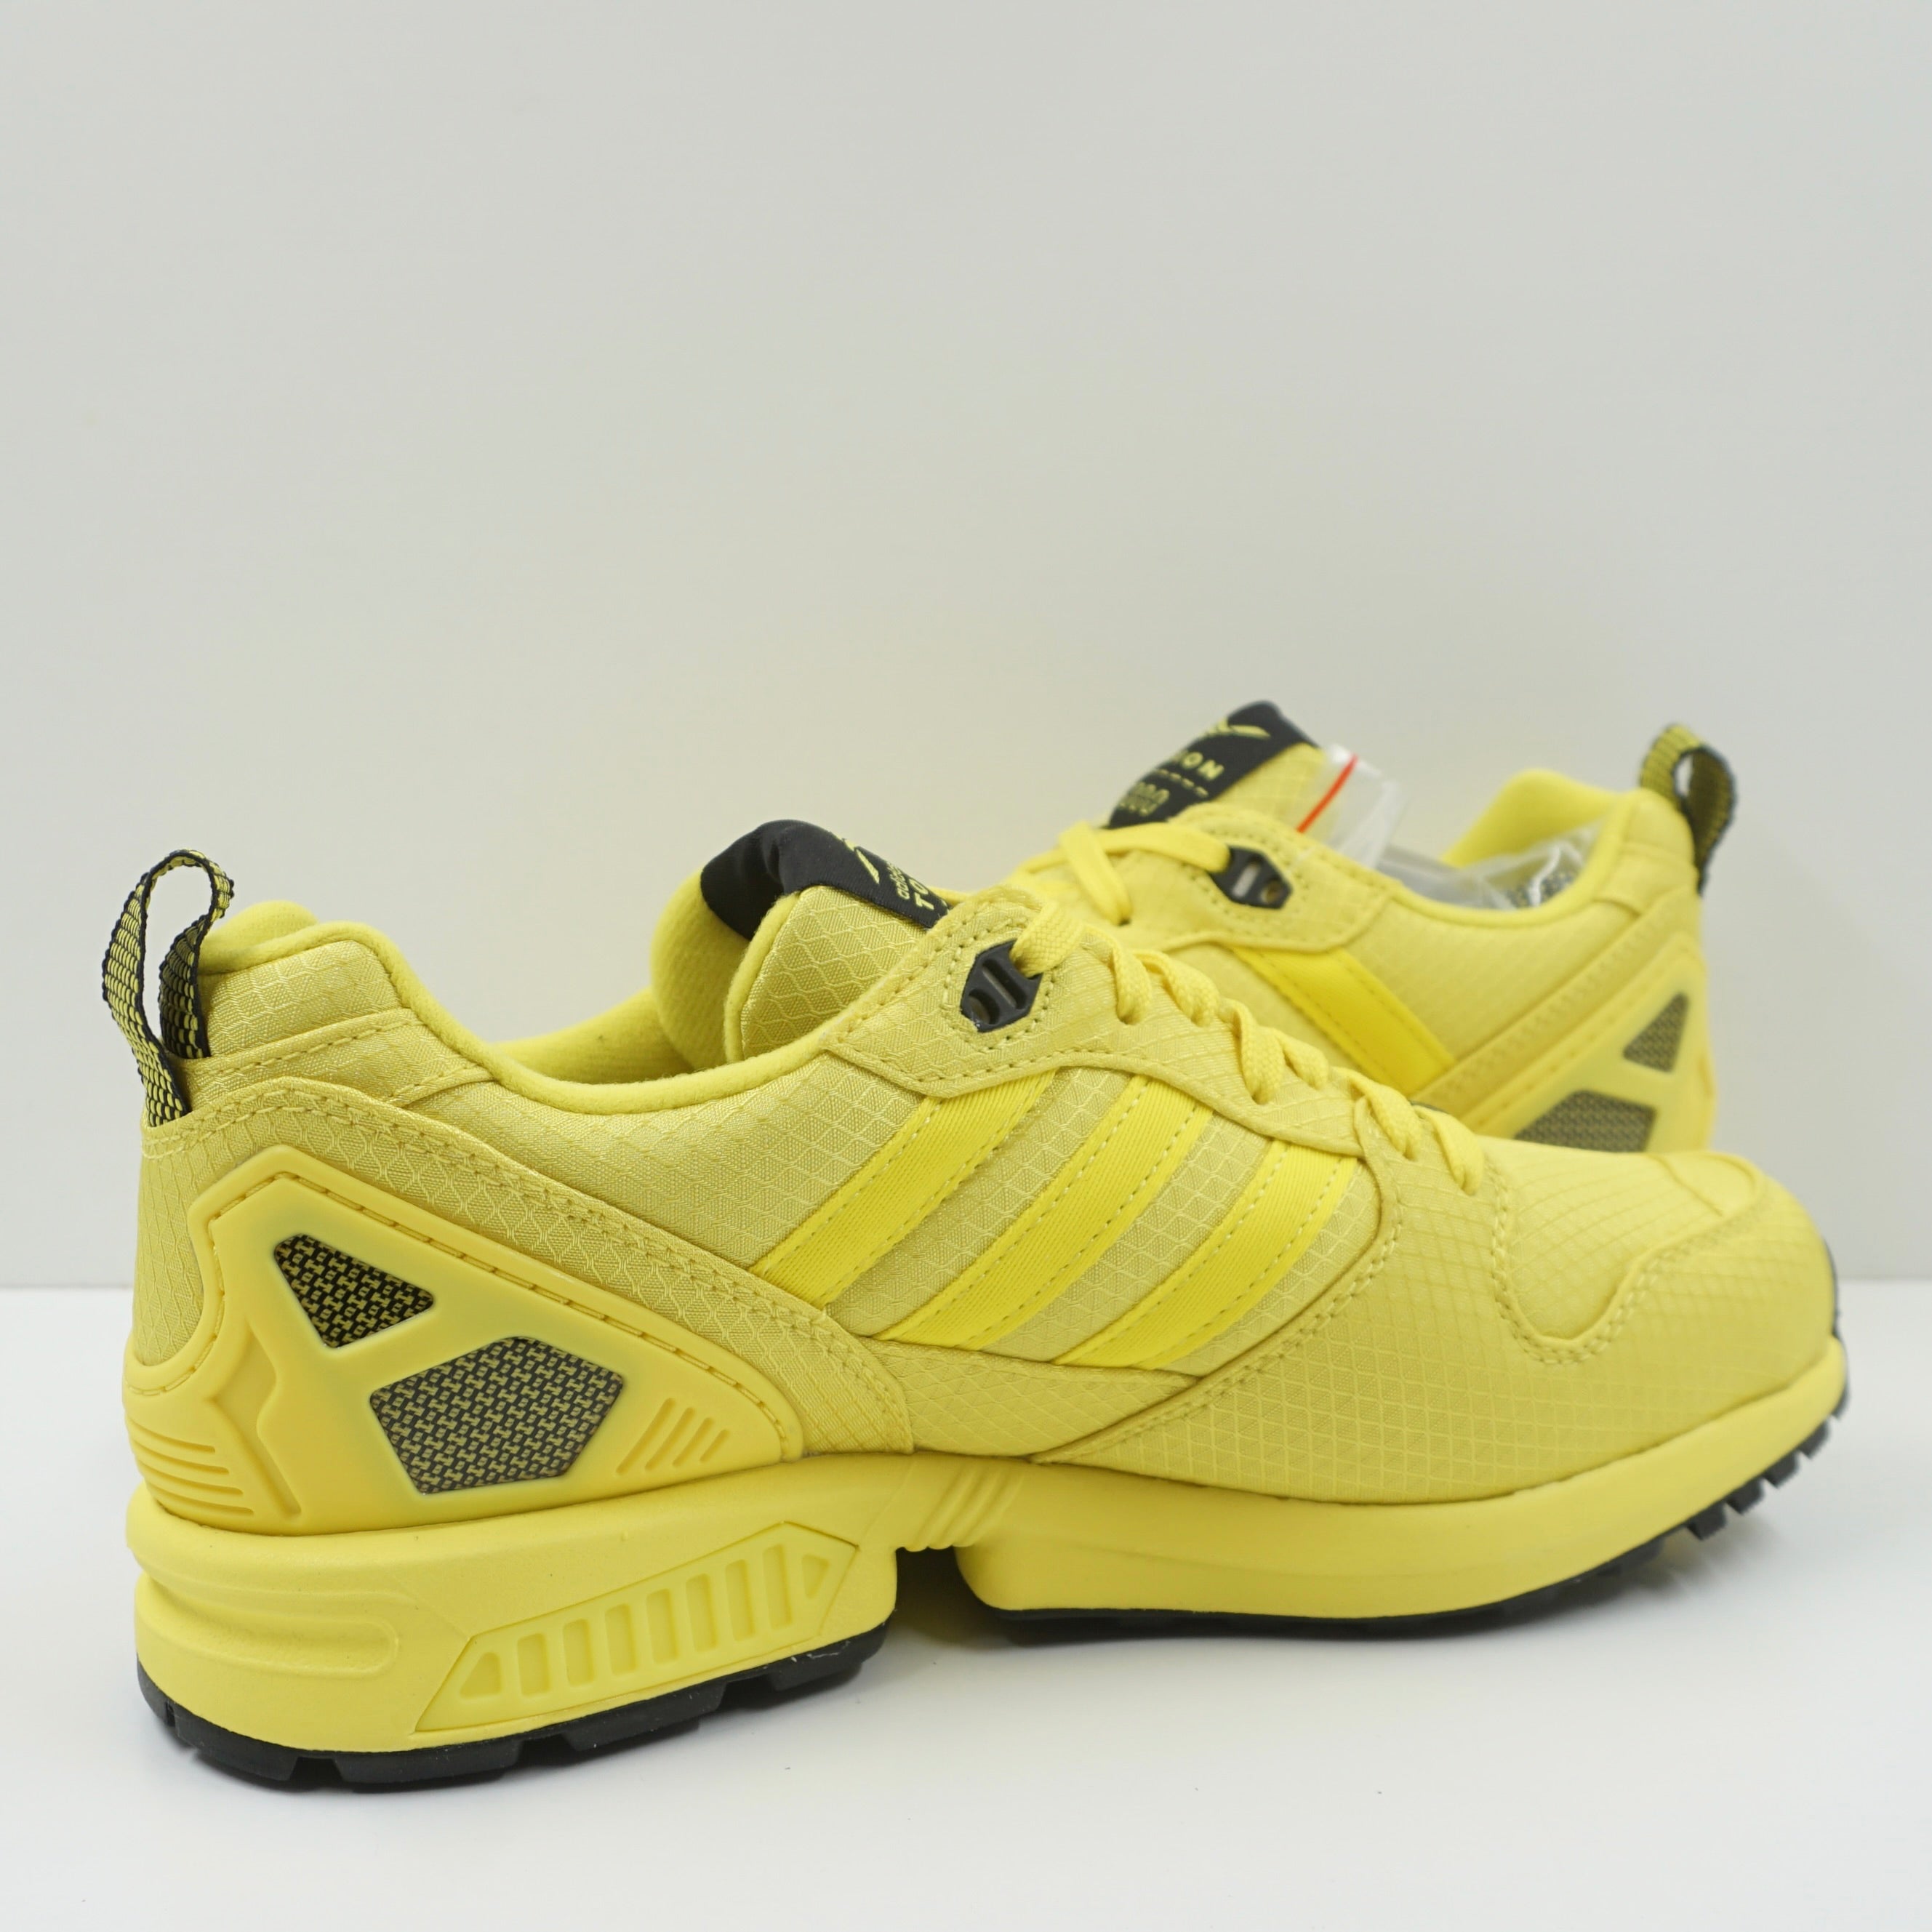 Adidas ZX 5000 Torsion Bright Yellow